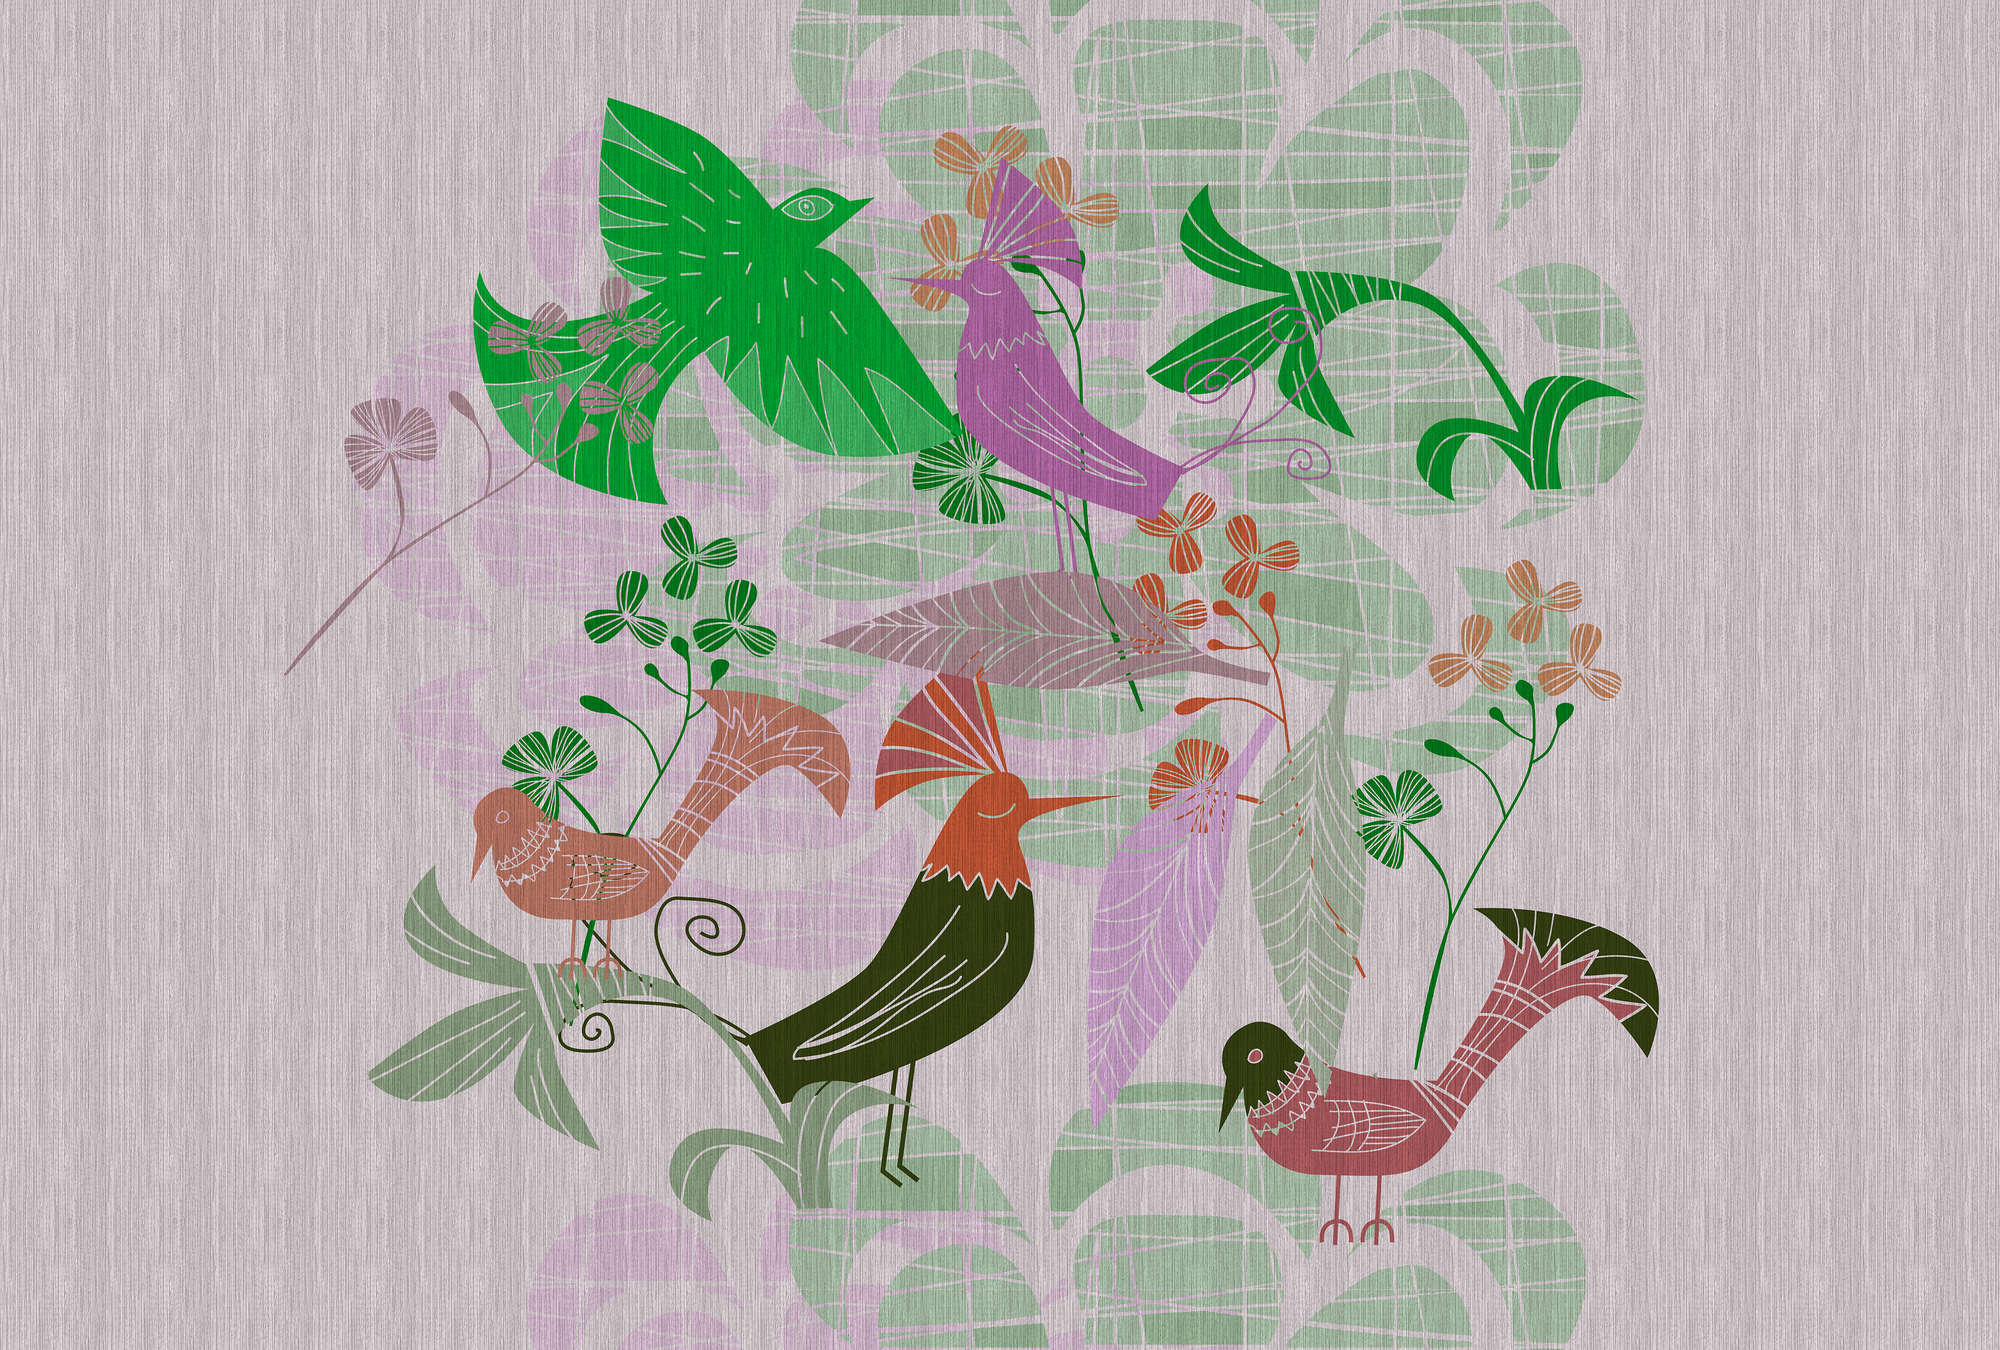             Birdland 2 - retro mural bird pattern in Scandinavian style
        